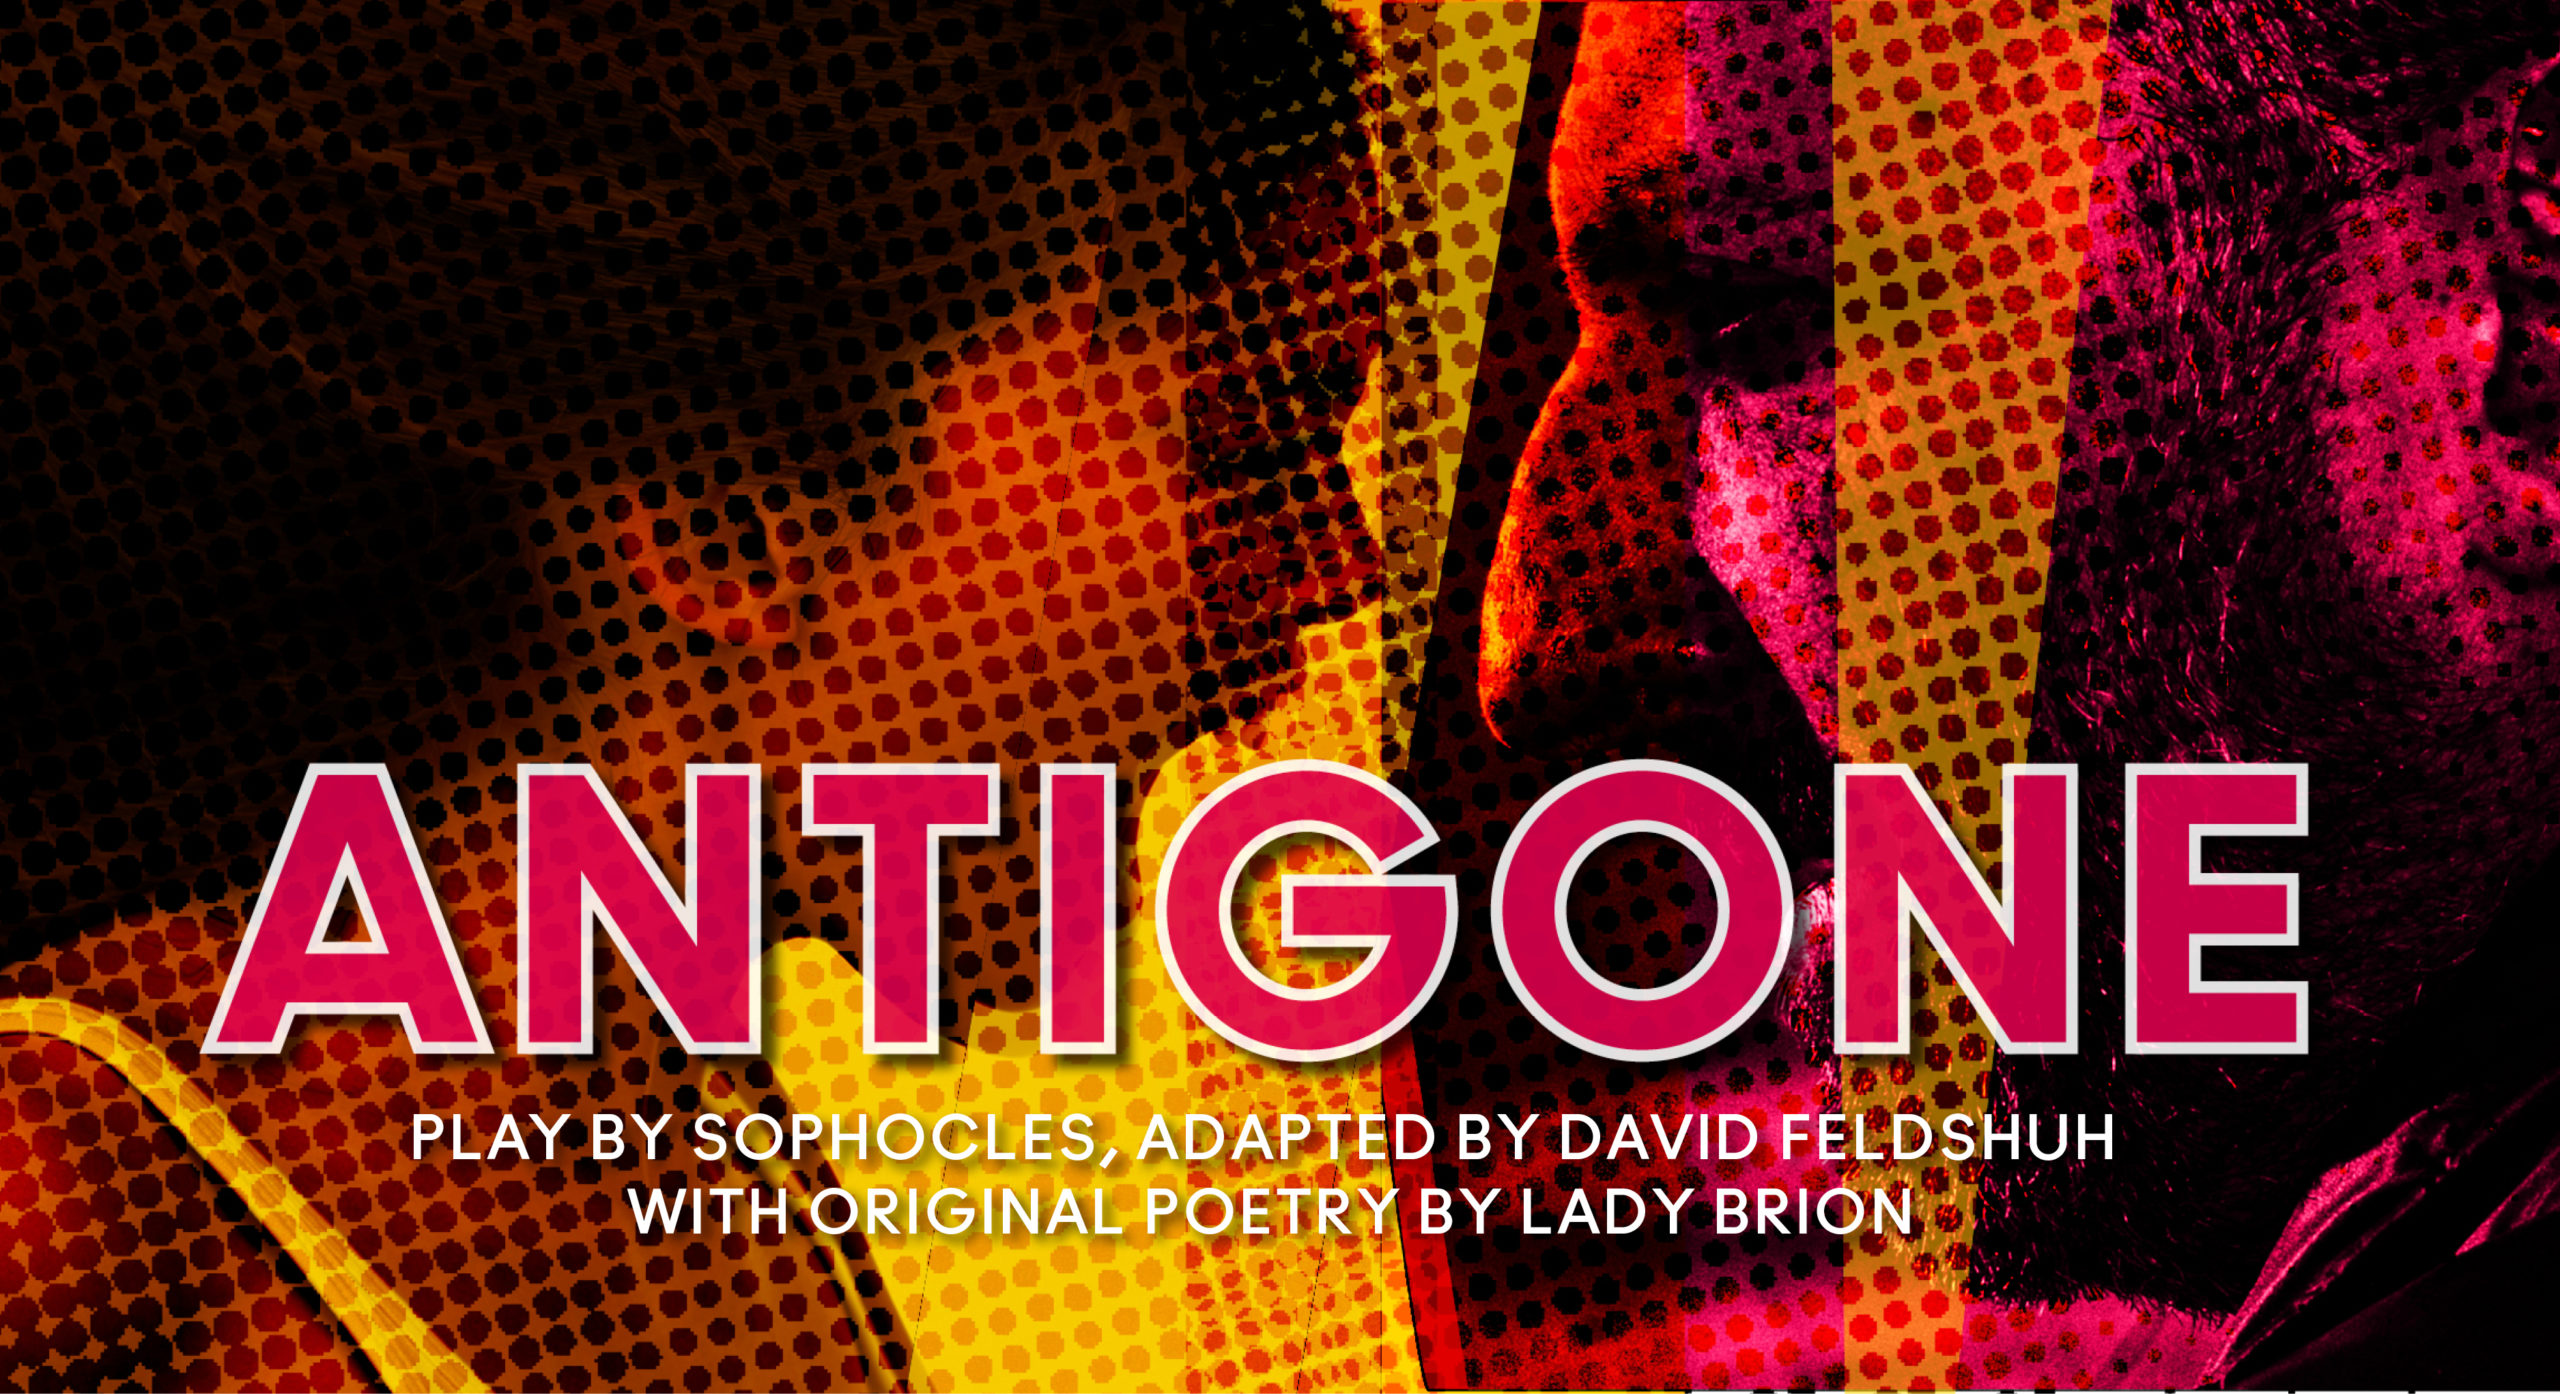 Profile Theatre Antigone: A Timeless Tale of Defiance - Profile Theatre